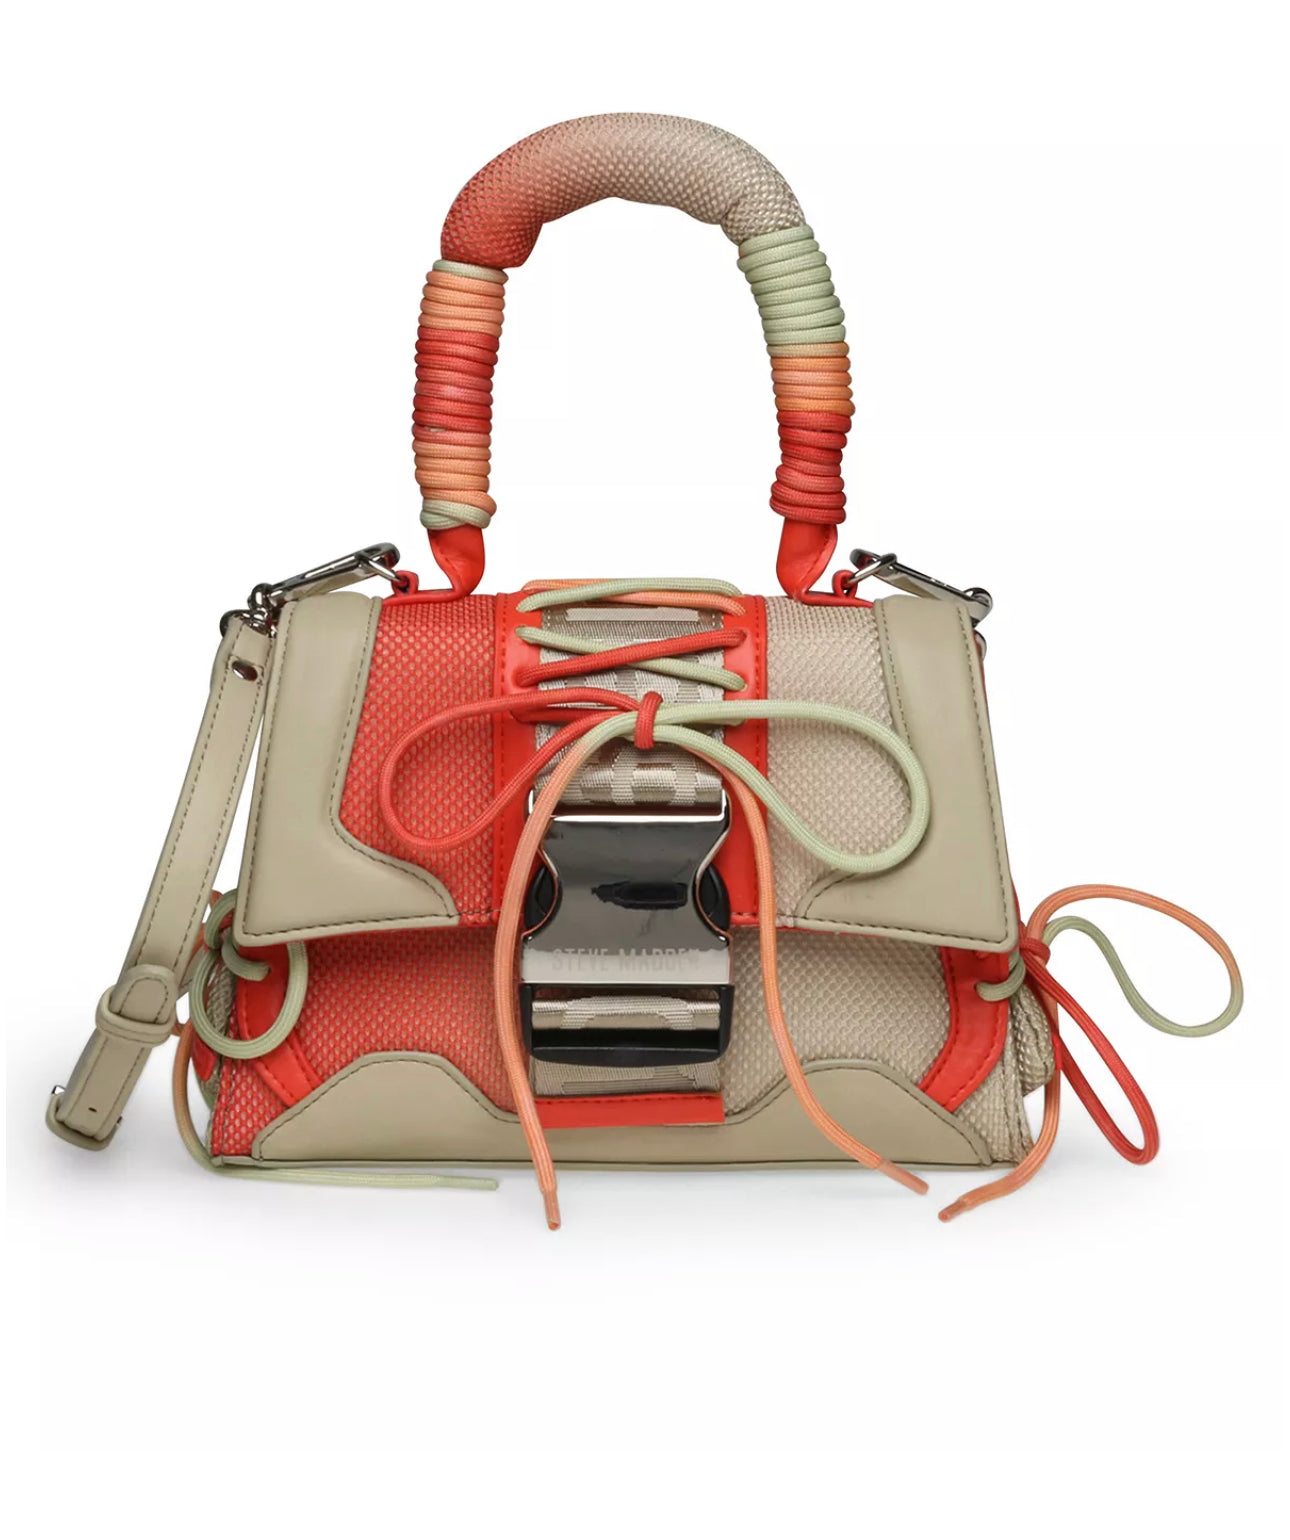 Buy Steve Madden Satchel Handbag (Fire Red Sffiano) (BDOMINAT) at Amazon.in